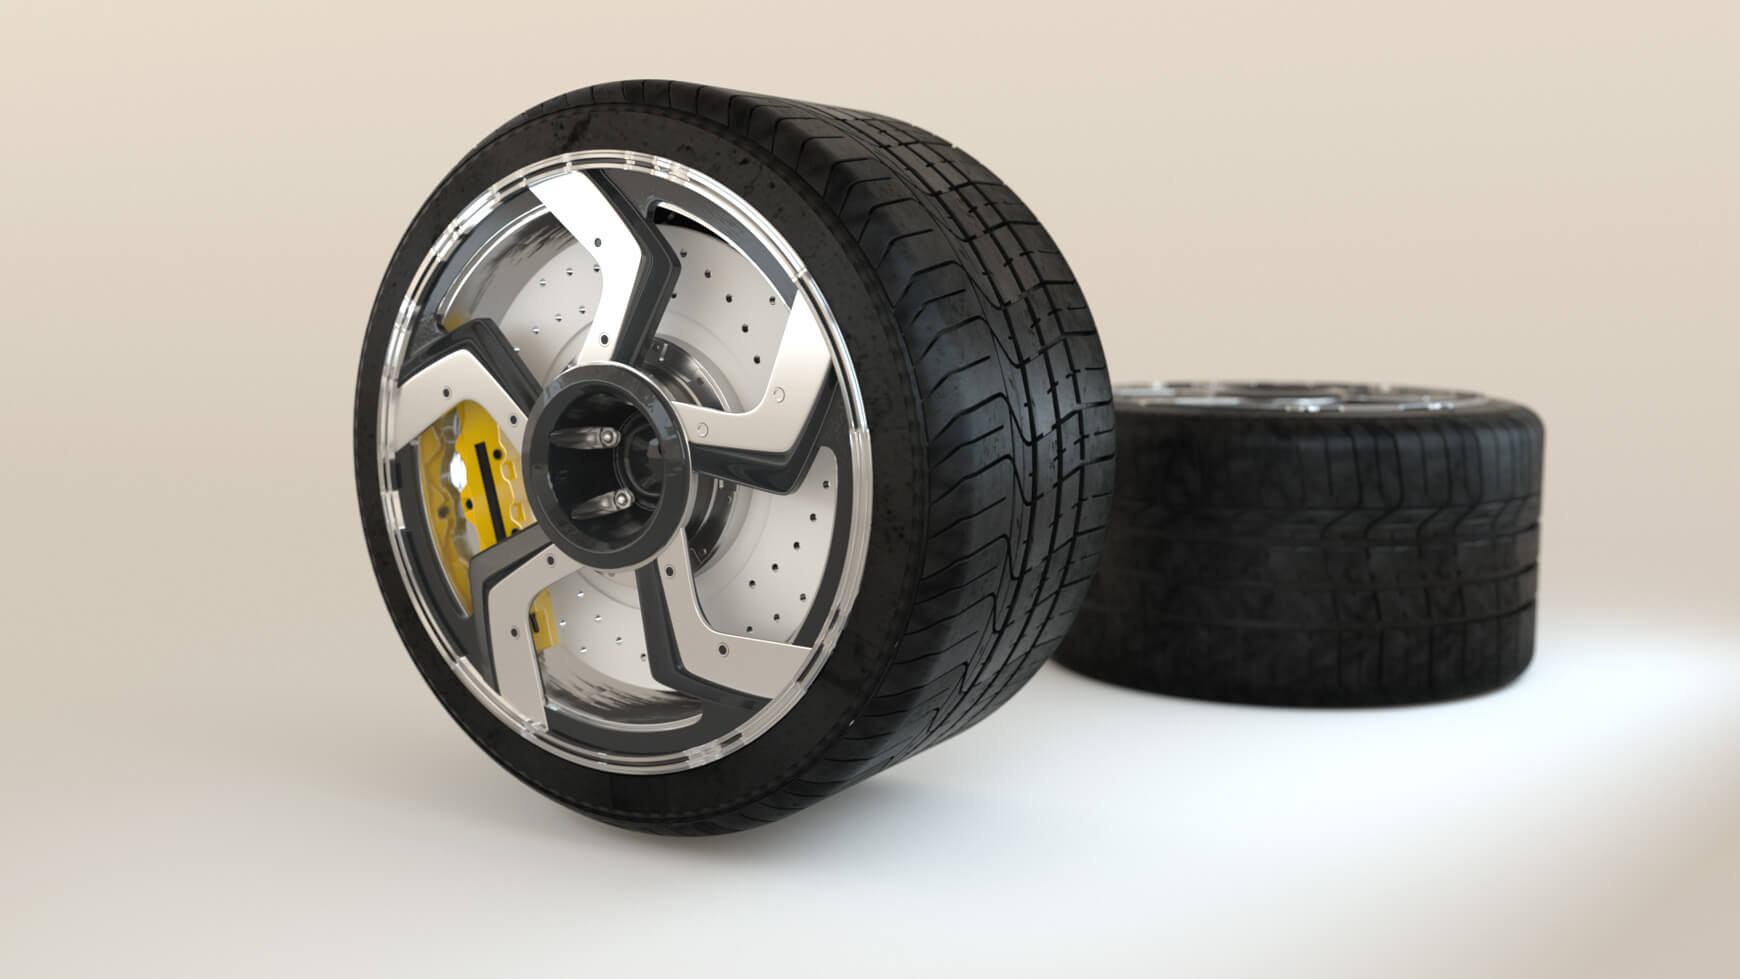 Free Cinema 4D 3D Model: Lambo Car Wheel - The Pixel Lab